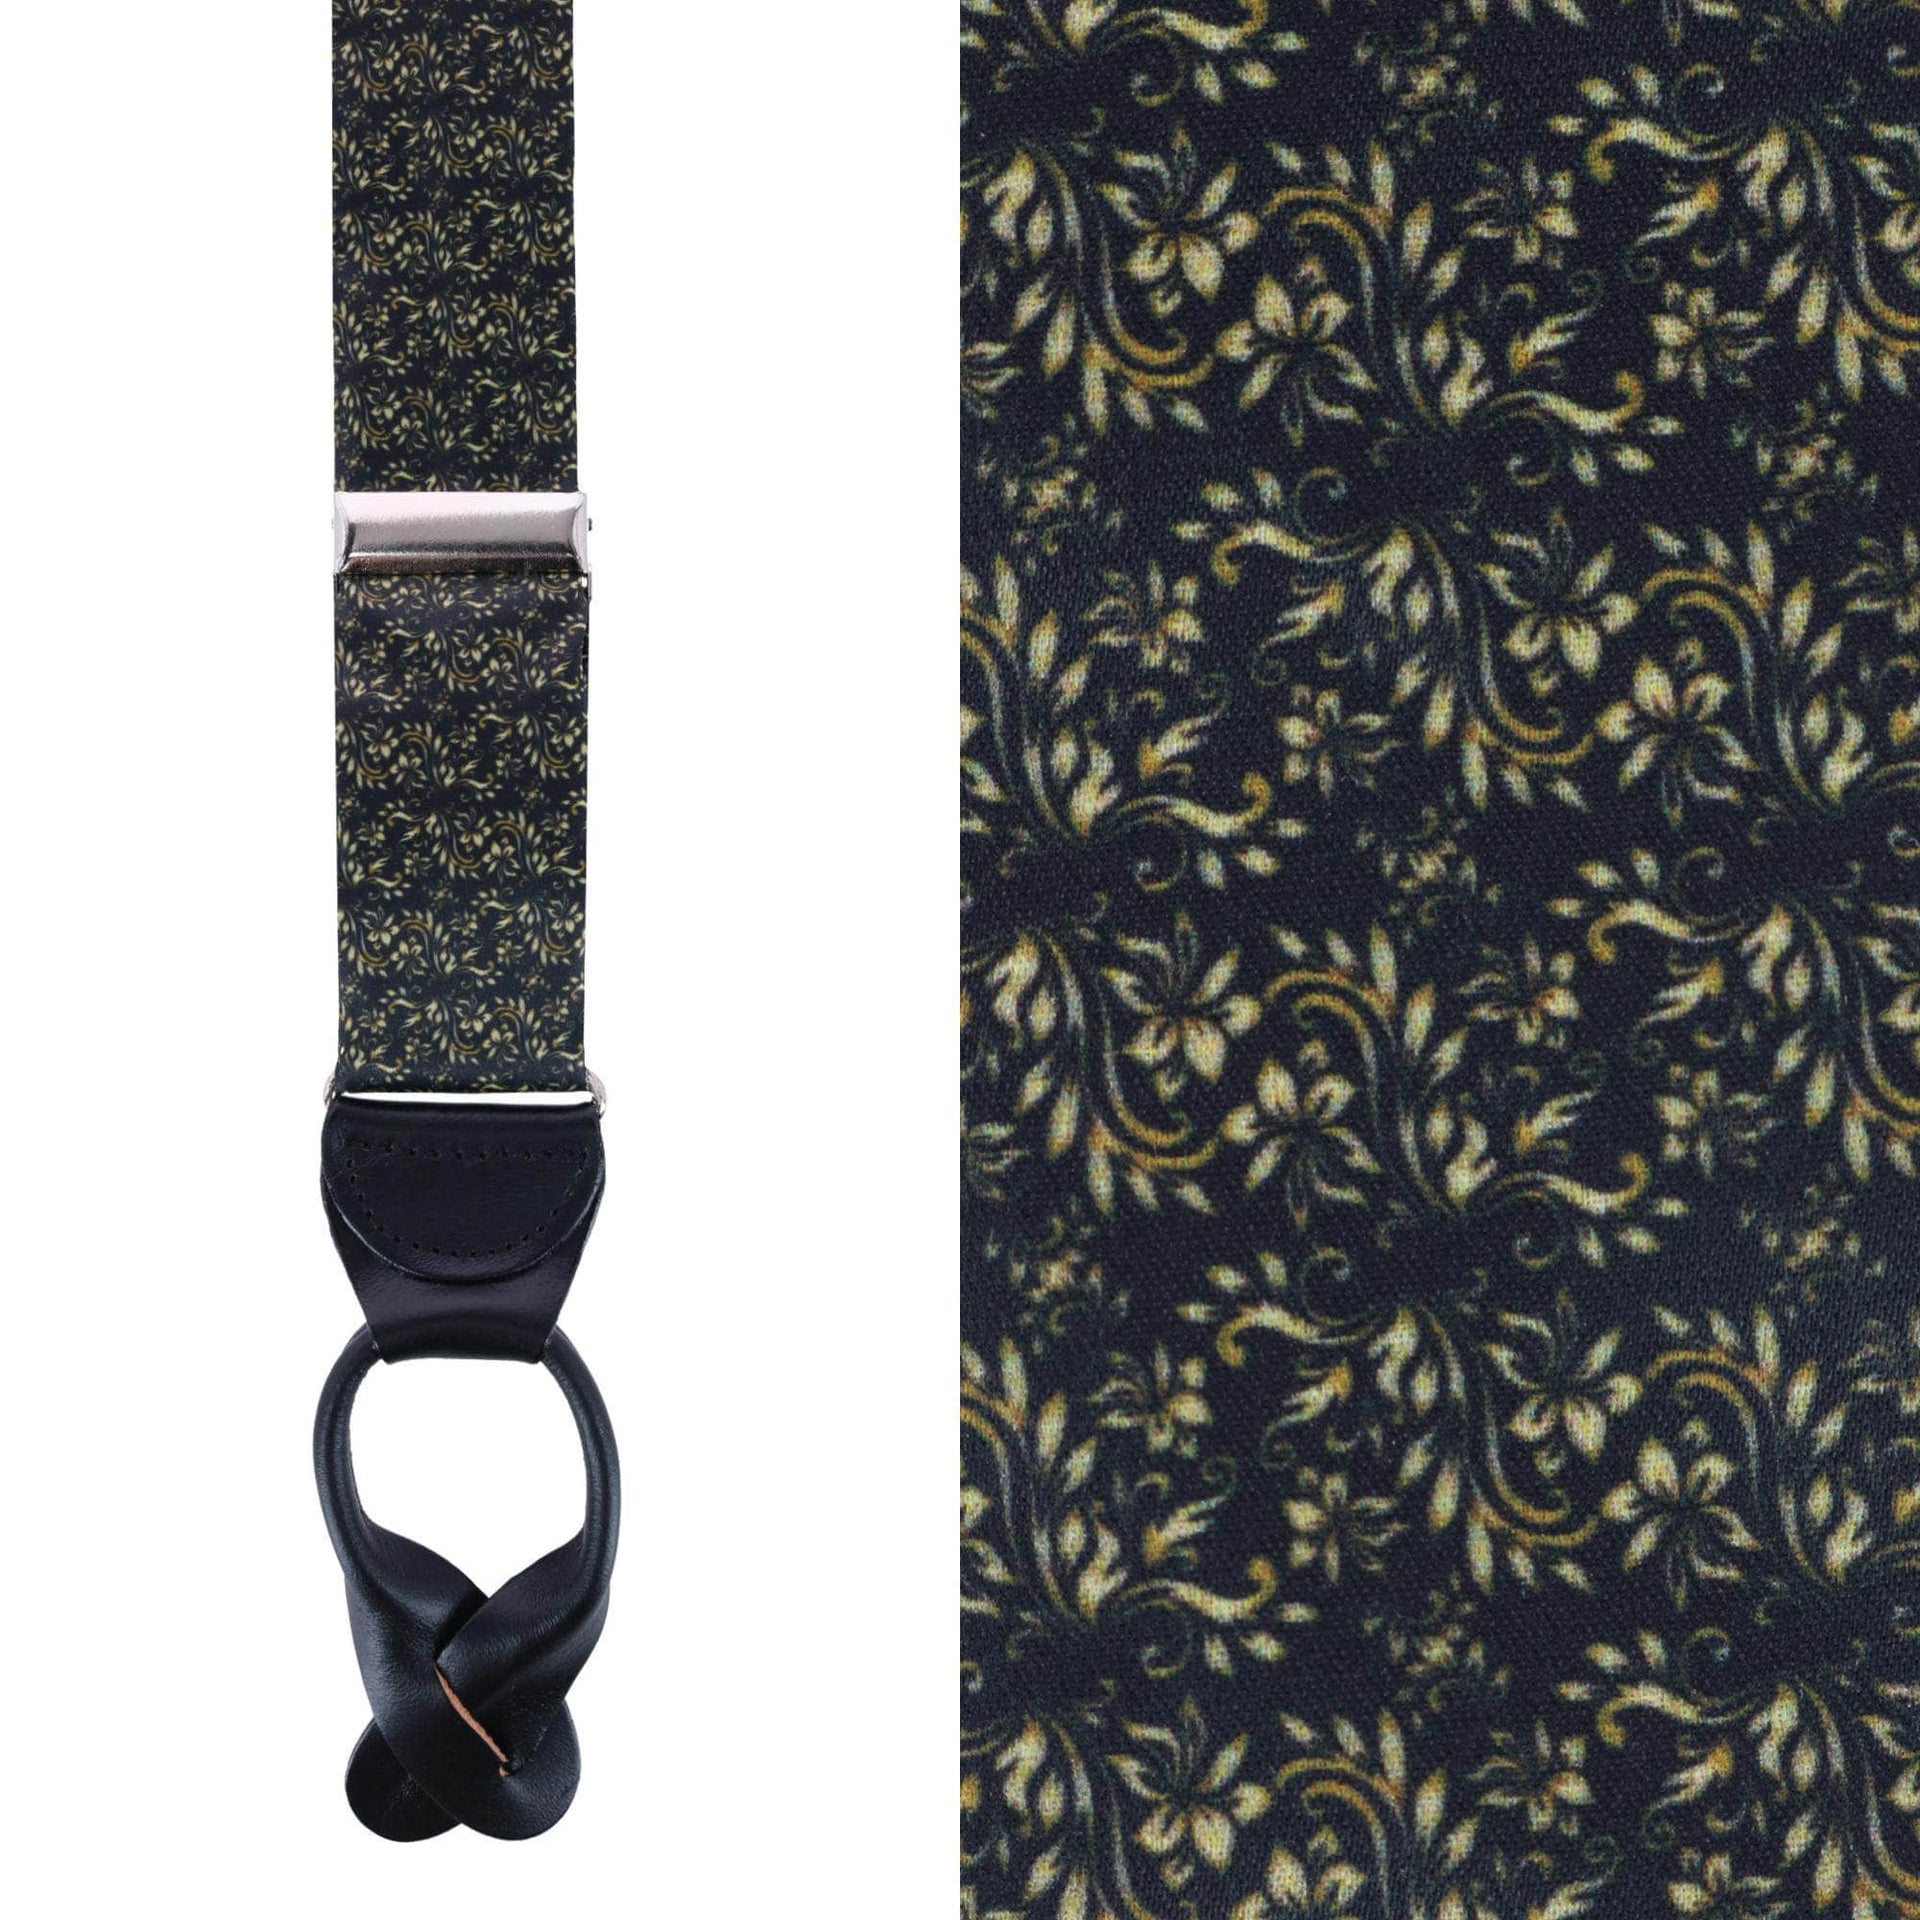 Scroll Silk Button End Braces by Trafalgar Men's Accessories